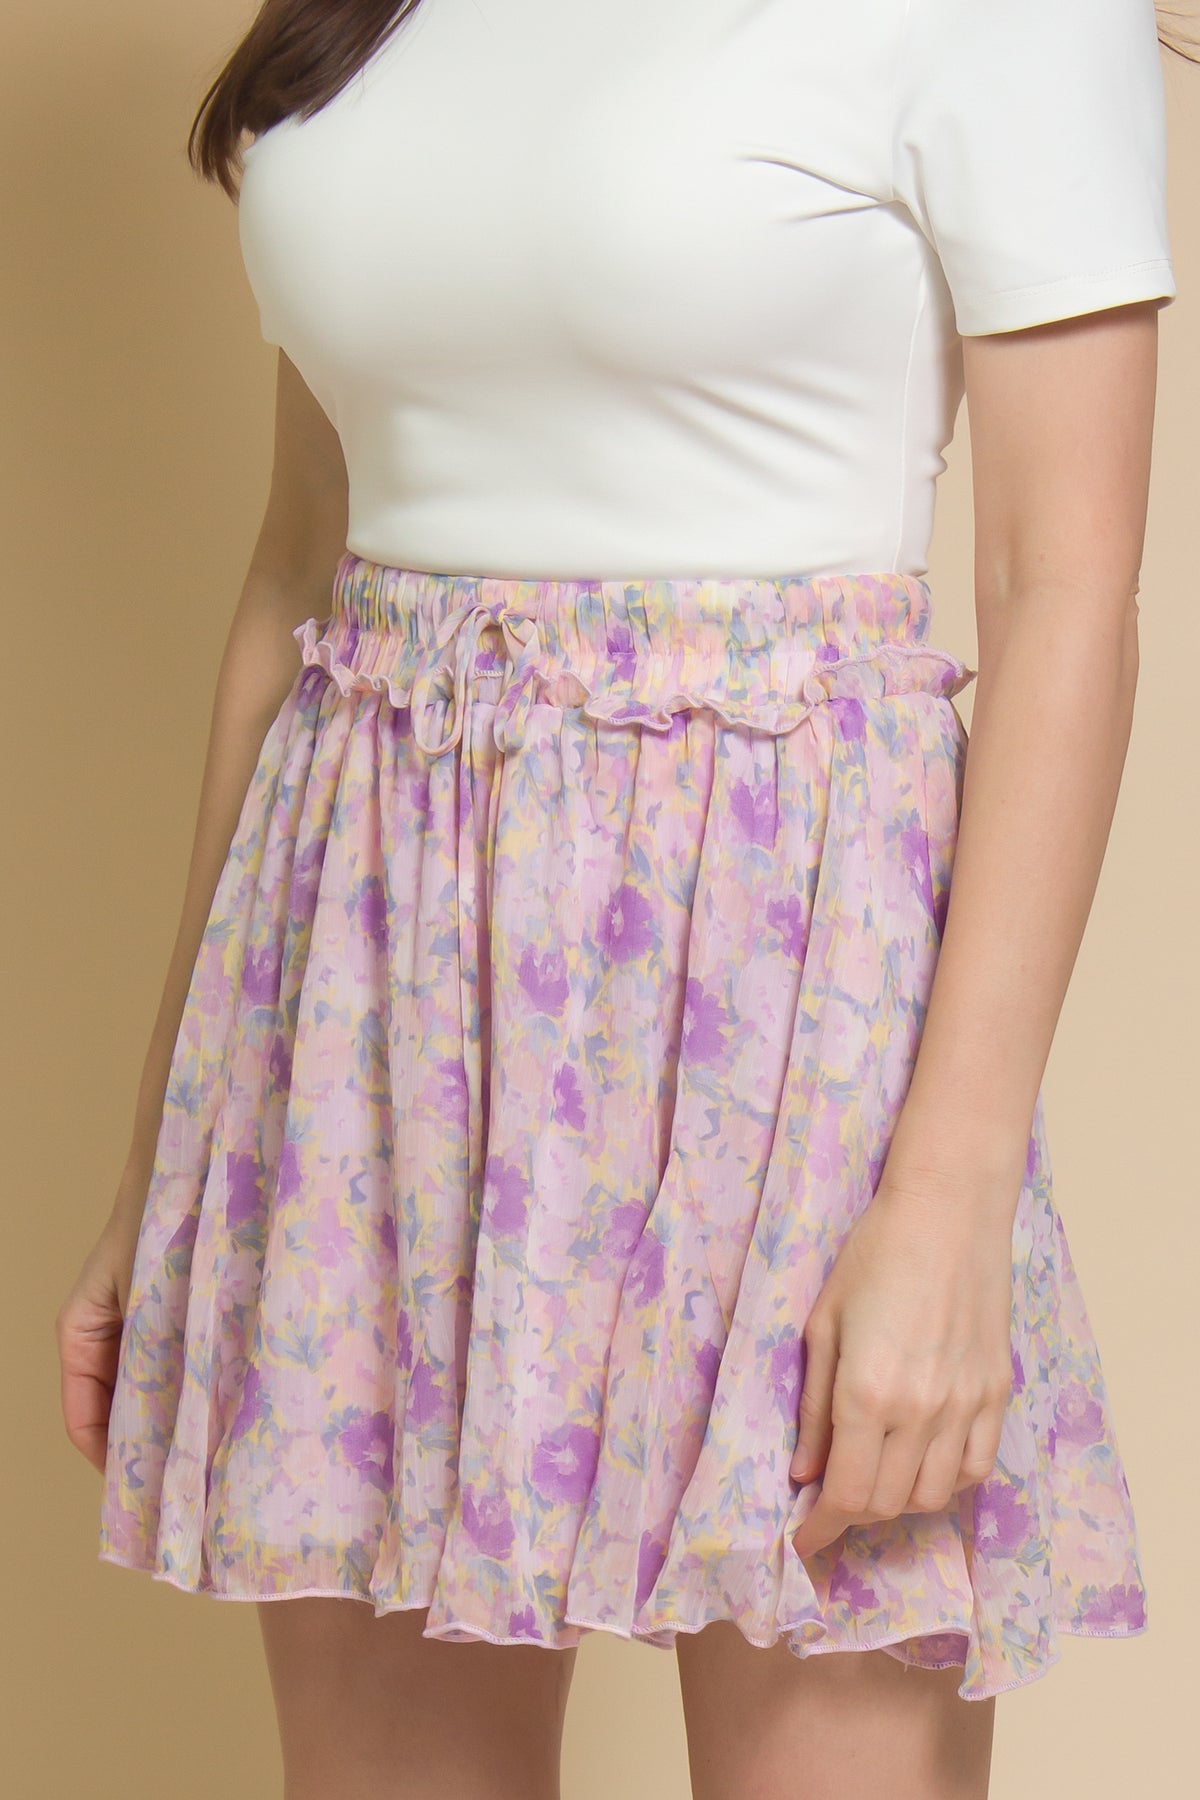 Ballet style mini skirt, in lavender floral.